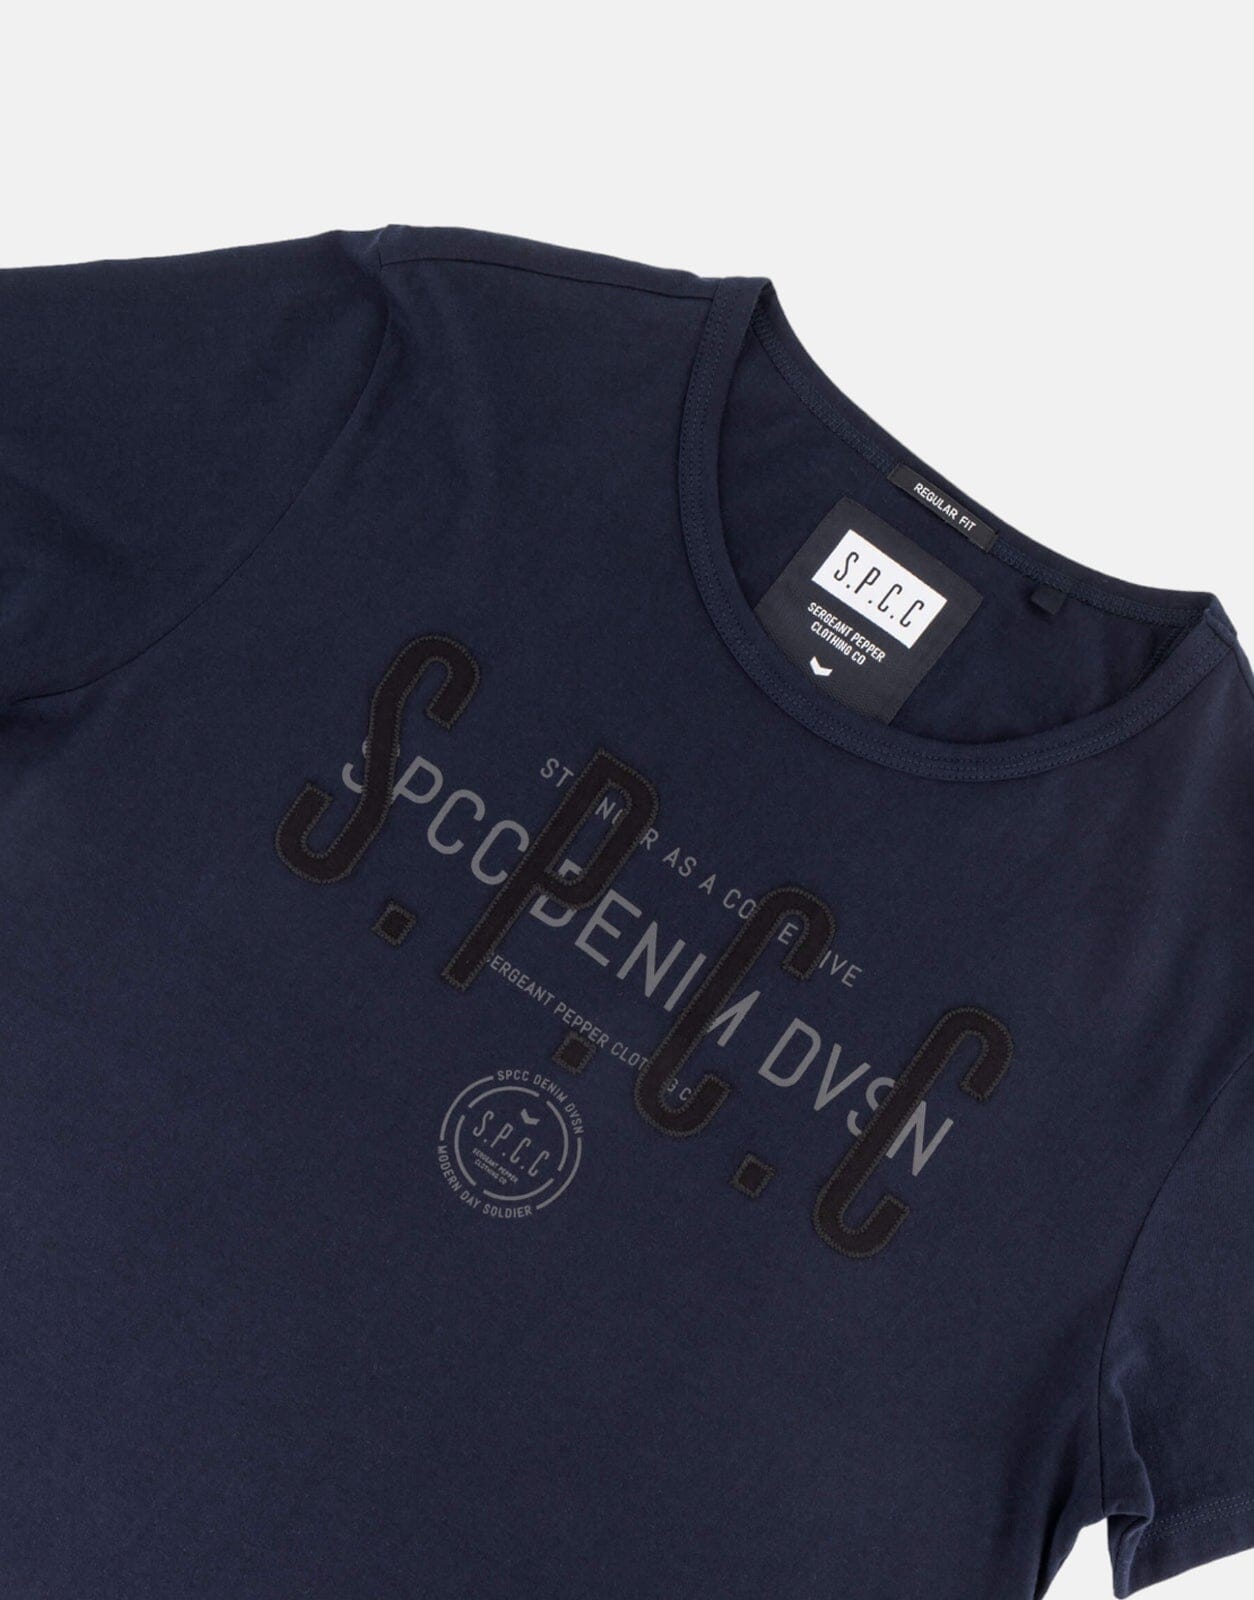 SPCC Radley Navy T-Shirt - Subwear